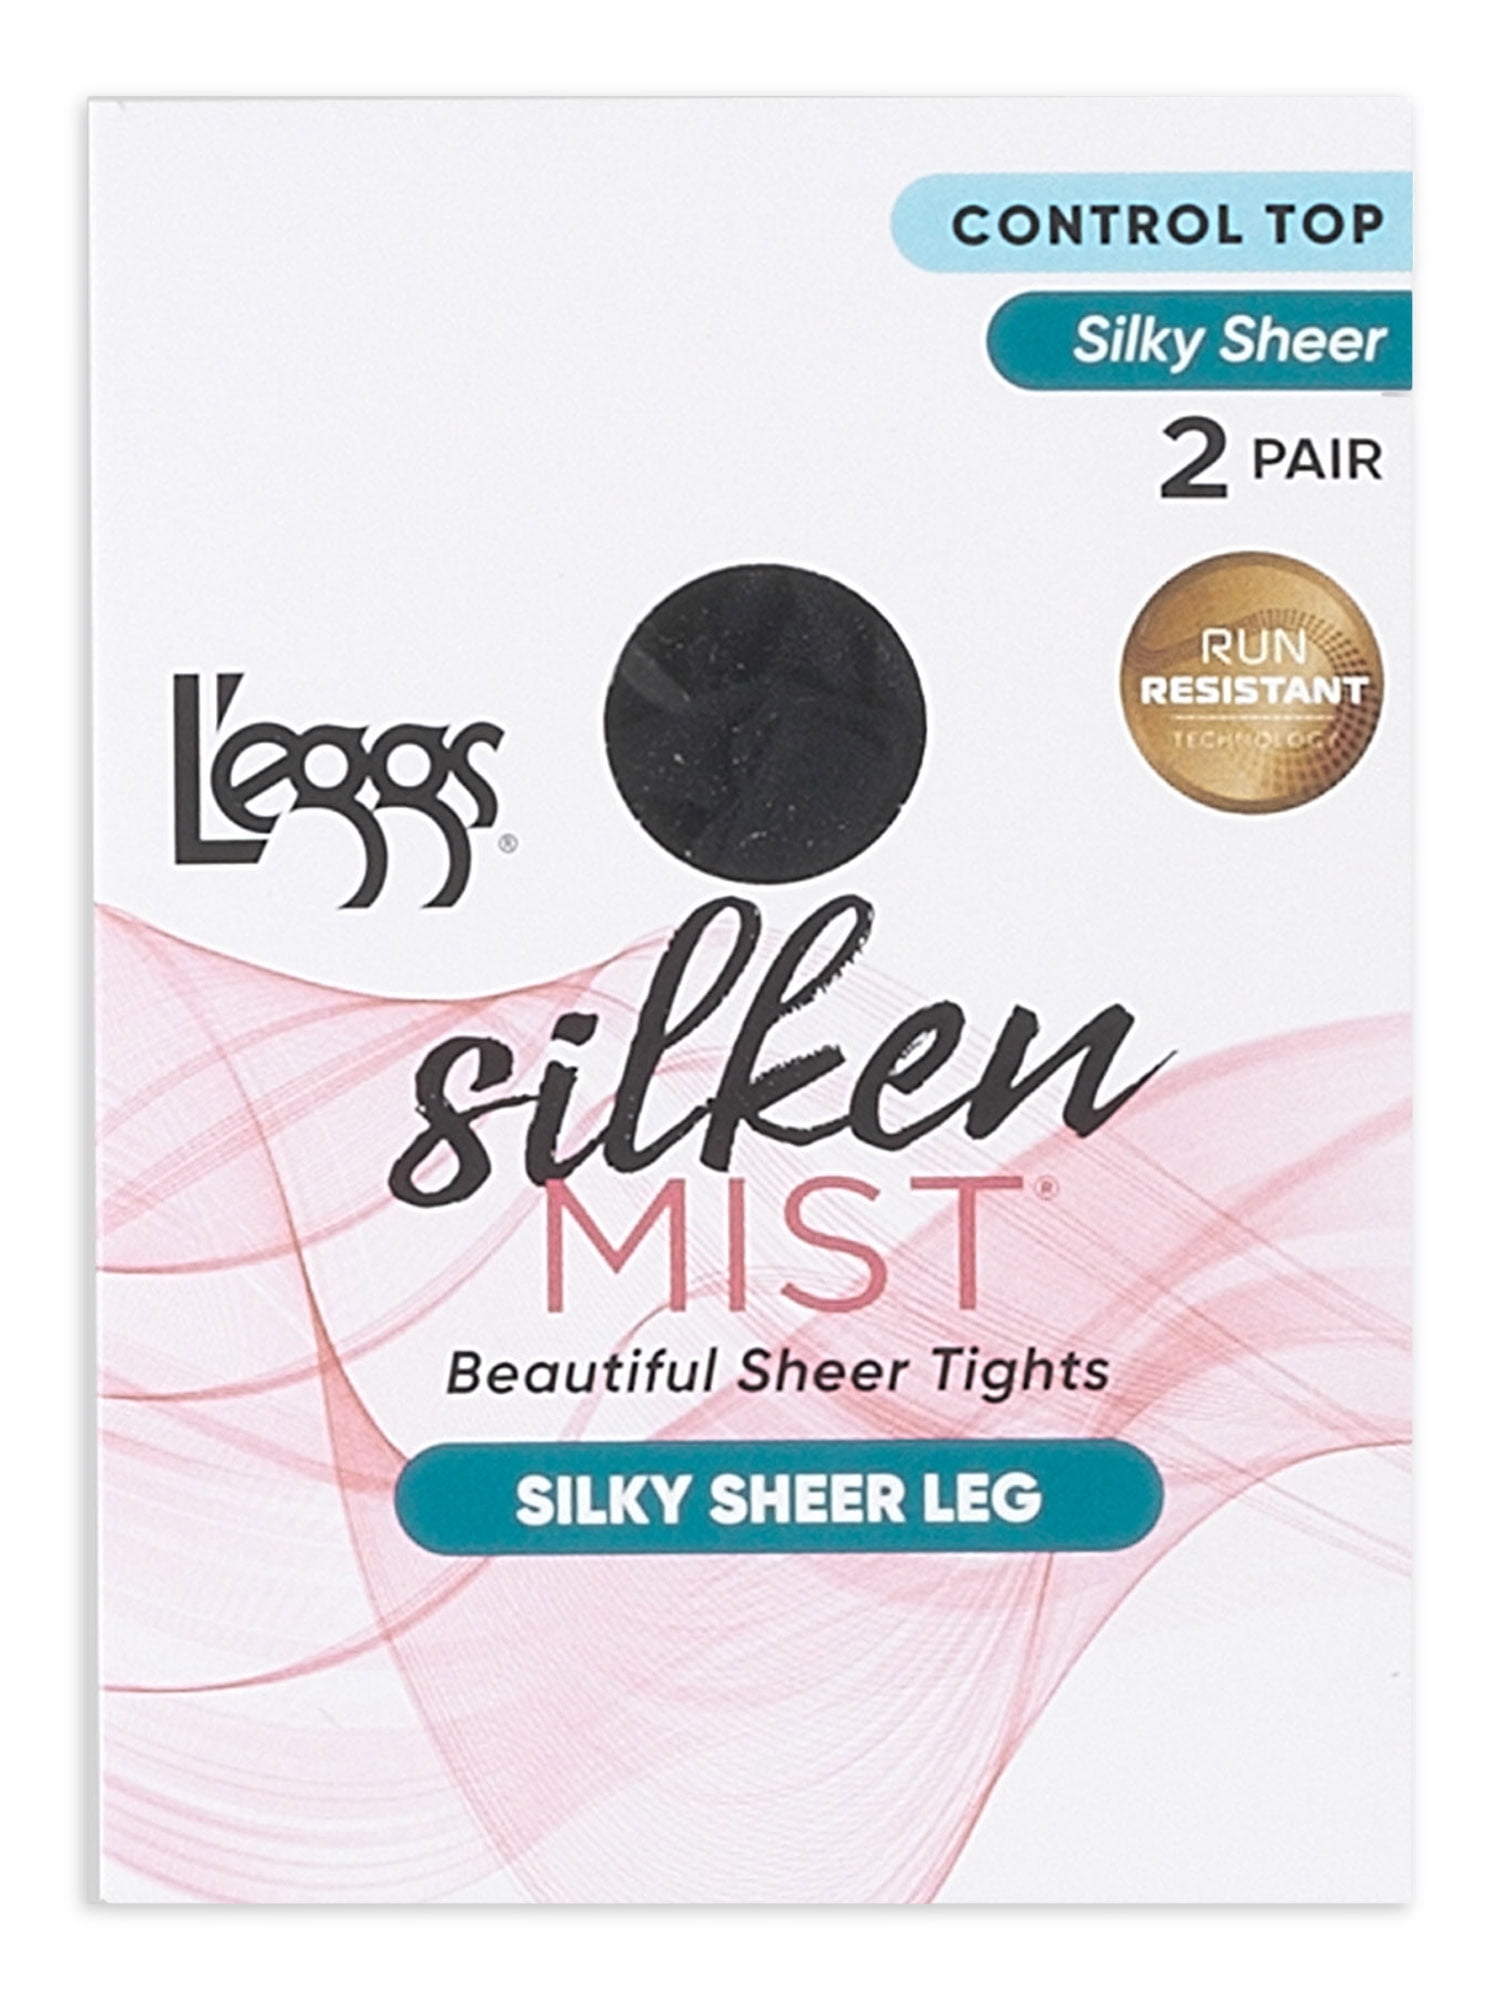 L'eggs Silken Mist Silky Sheer Leg Control Top Run Resistant Sheer Toe  Tights, 2 Pair 